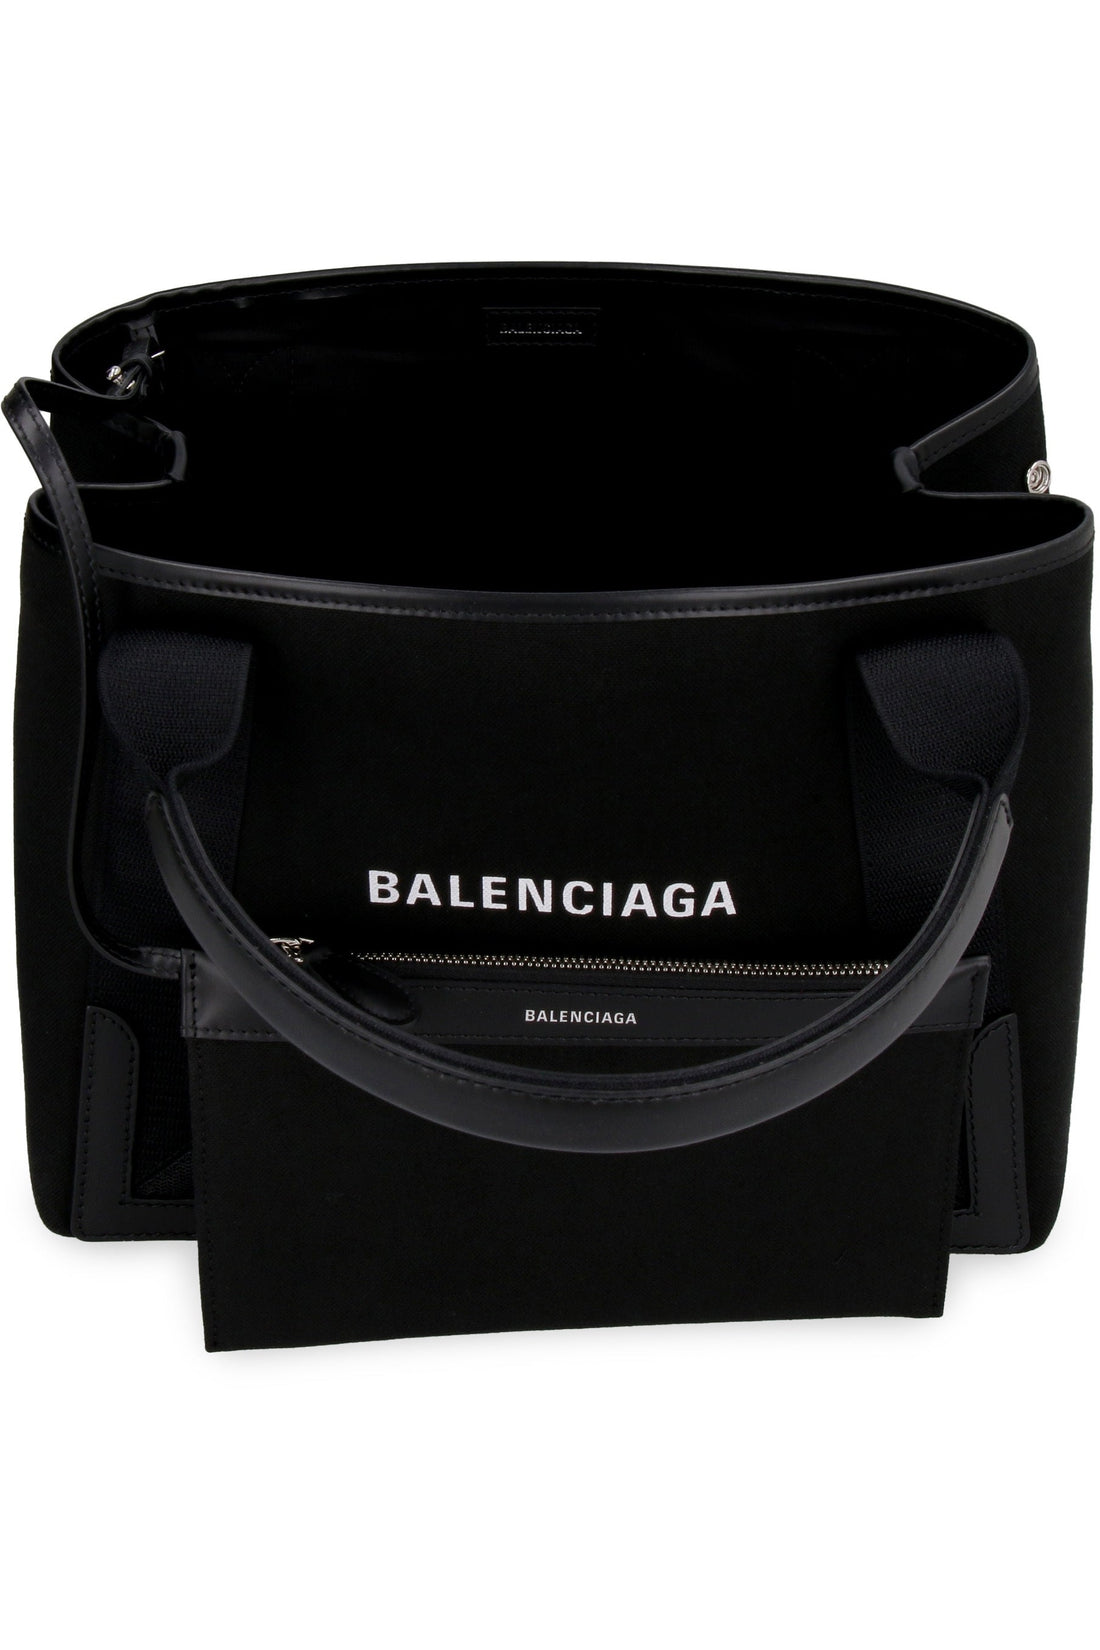 Balenciaga-OUTLET-SALE-Cabas canvas tote bag-ARCHIVIST